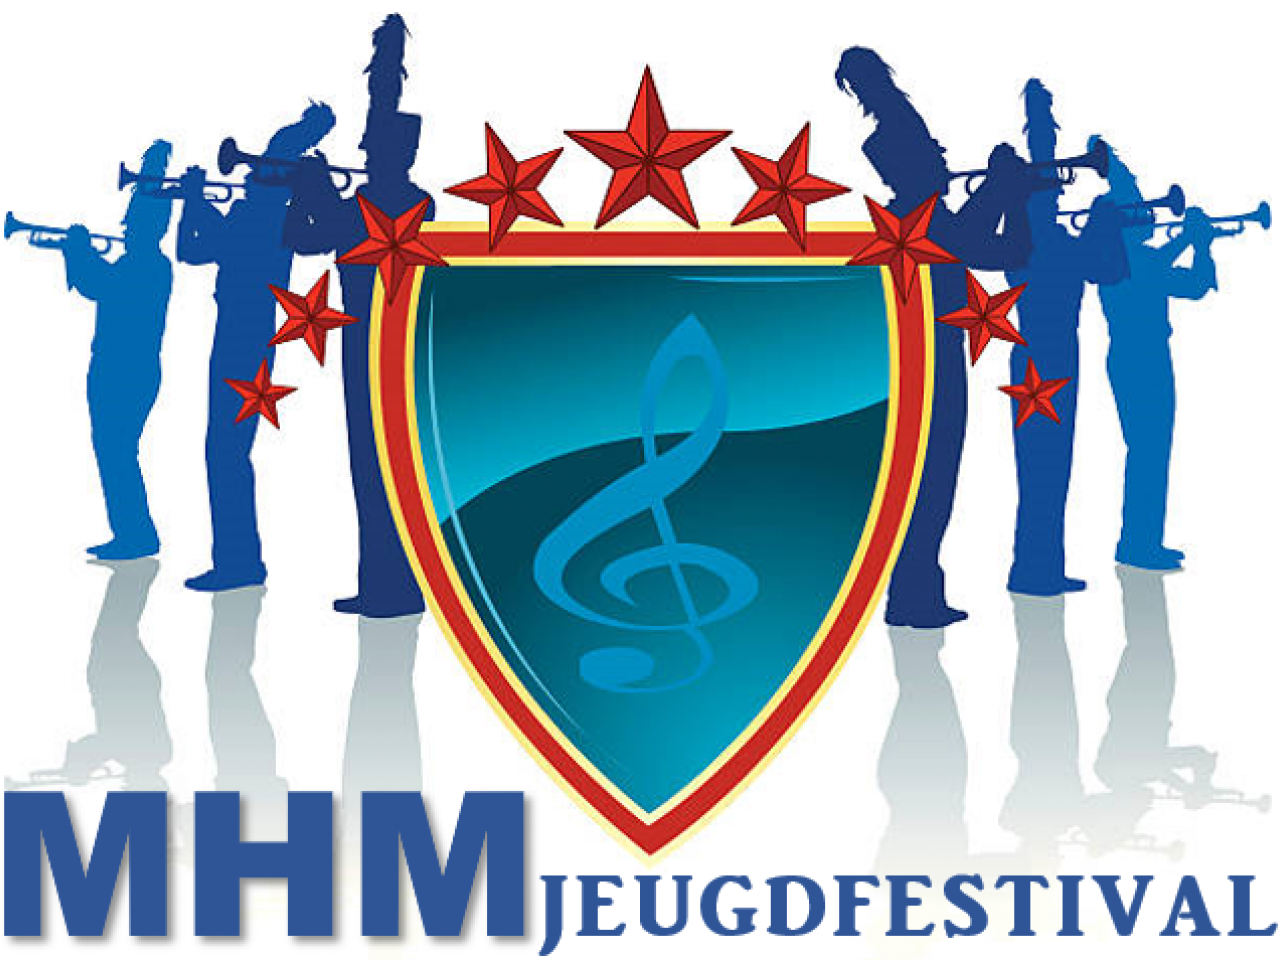 Logo MHM